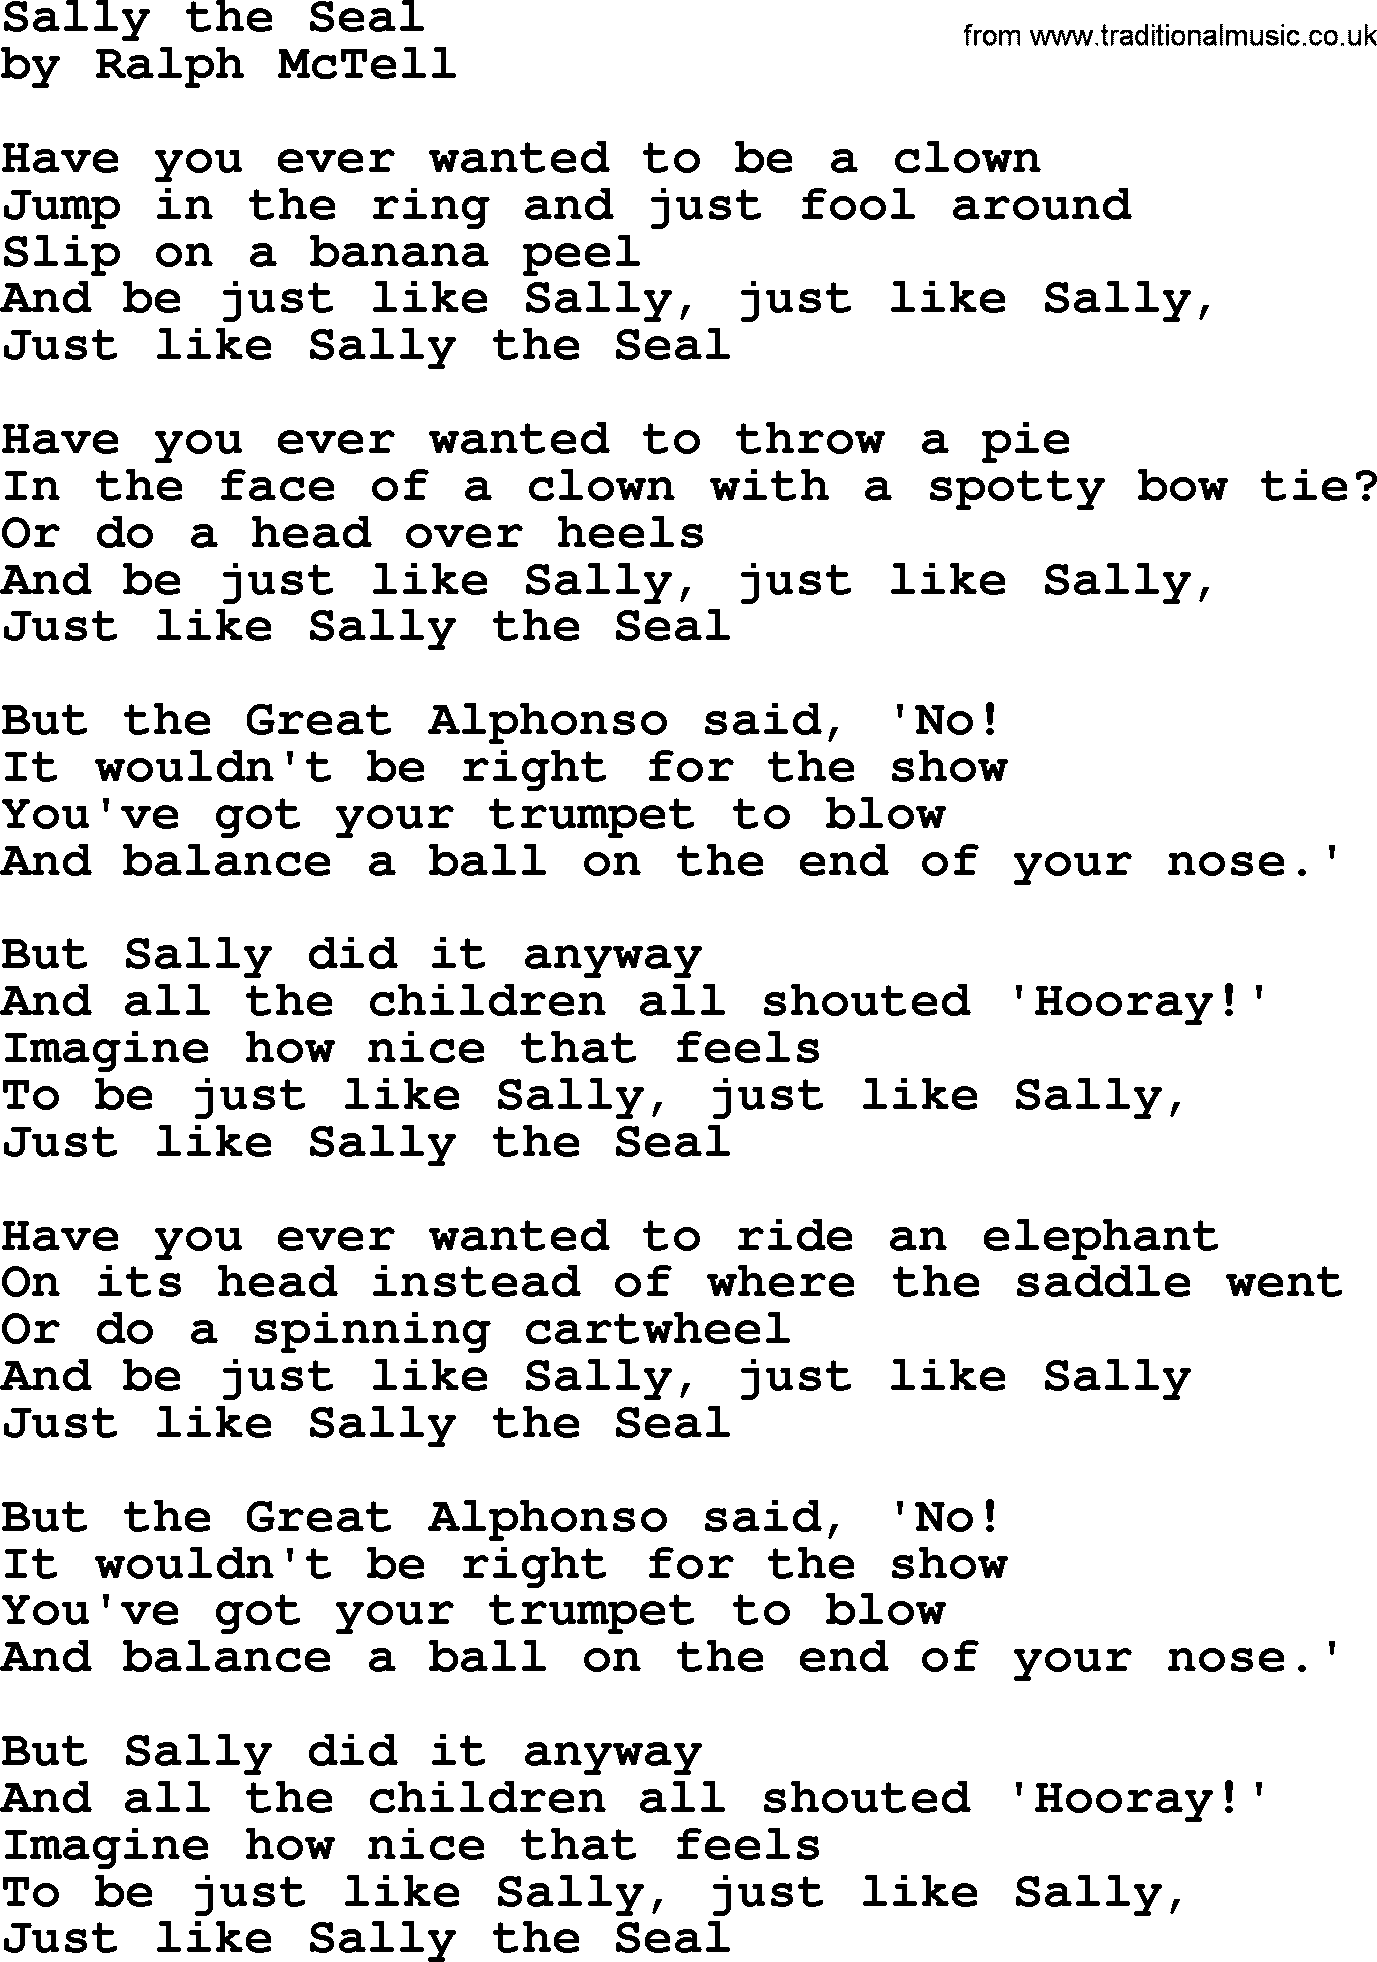 Ralph McTell Song: Sally The Seal, lyrics